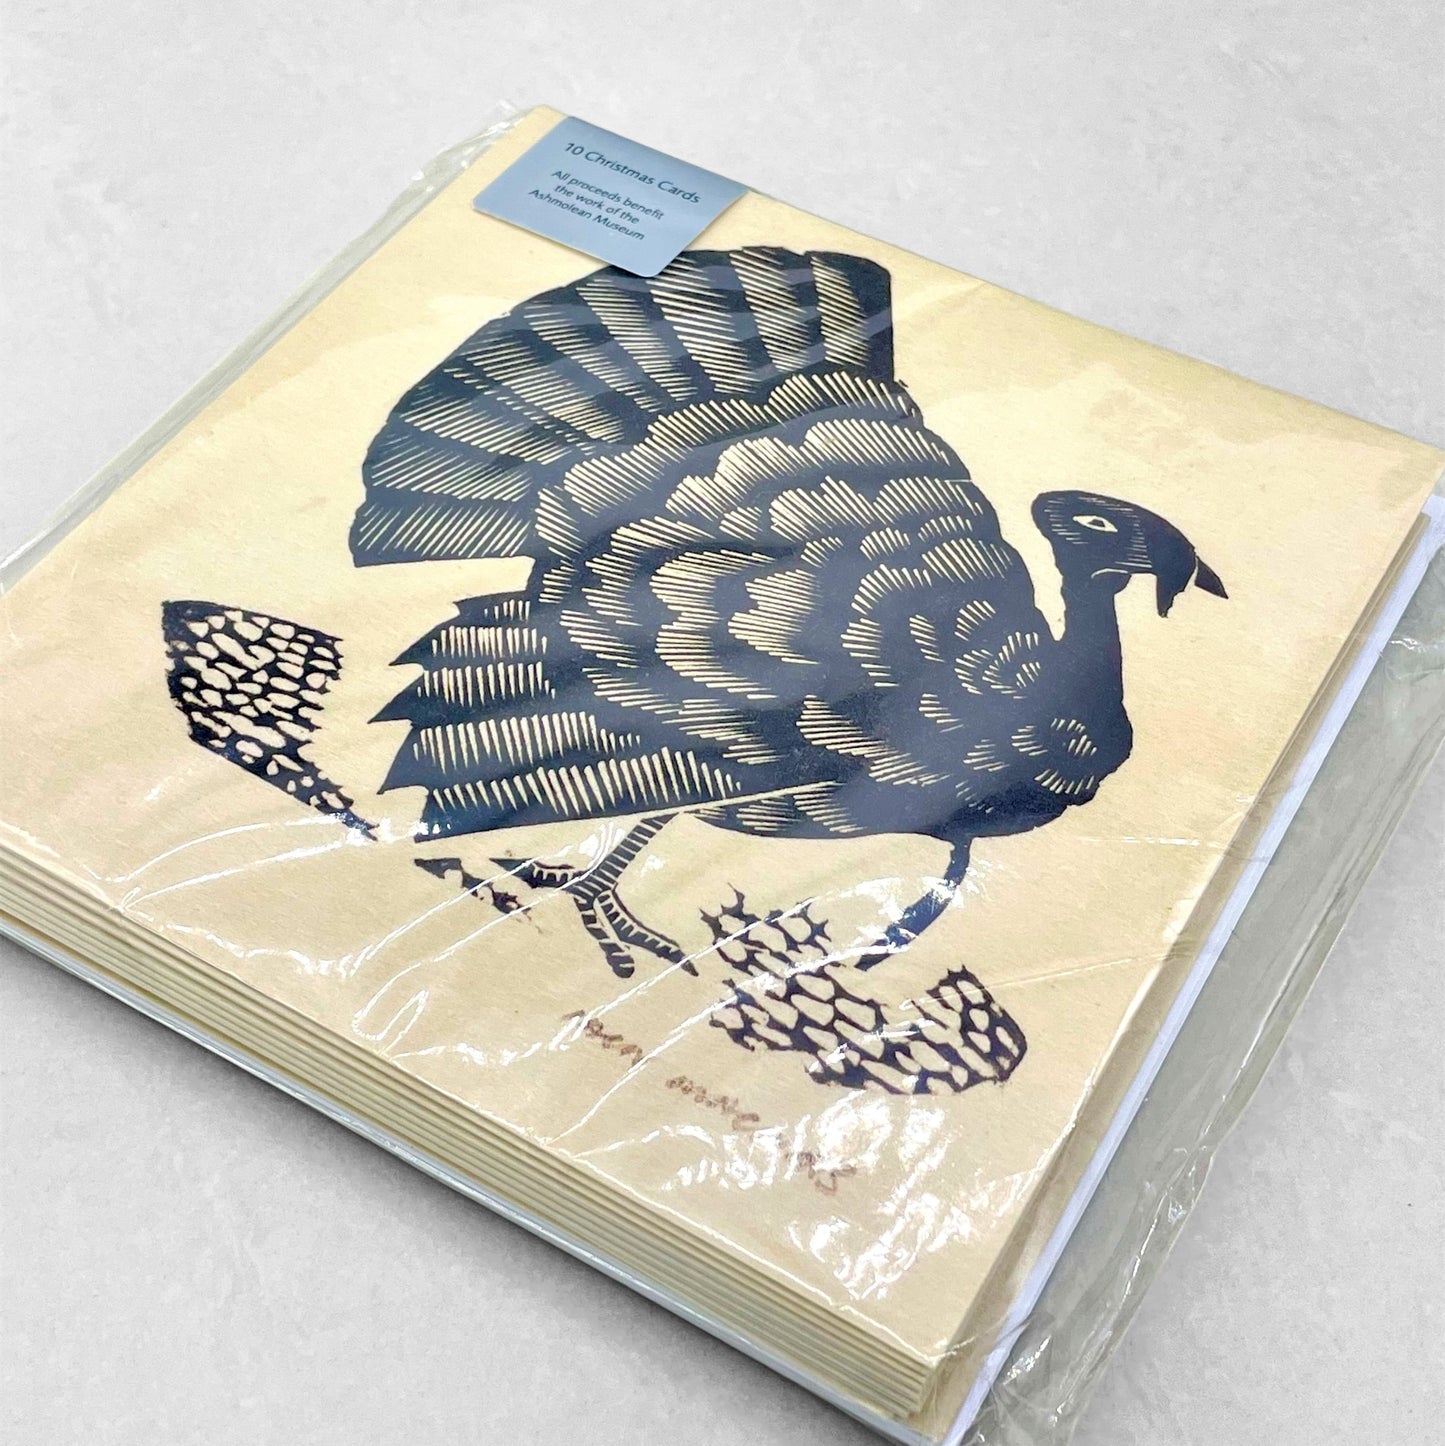 greetings card of a large black turkey on a cream backdrop by John Austin Publishing